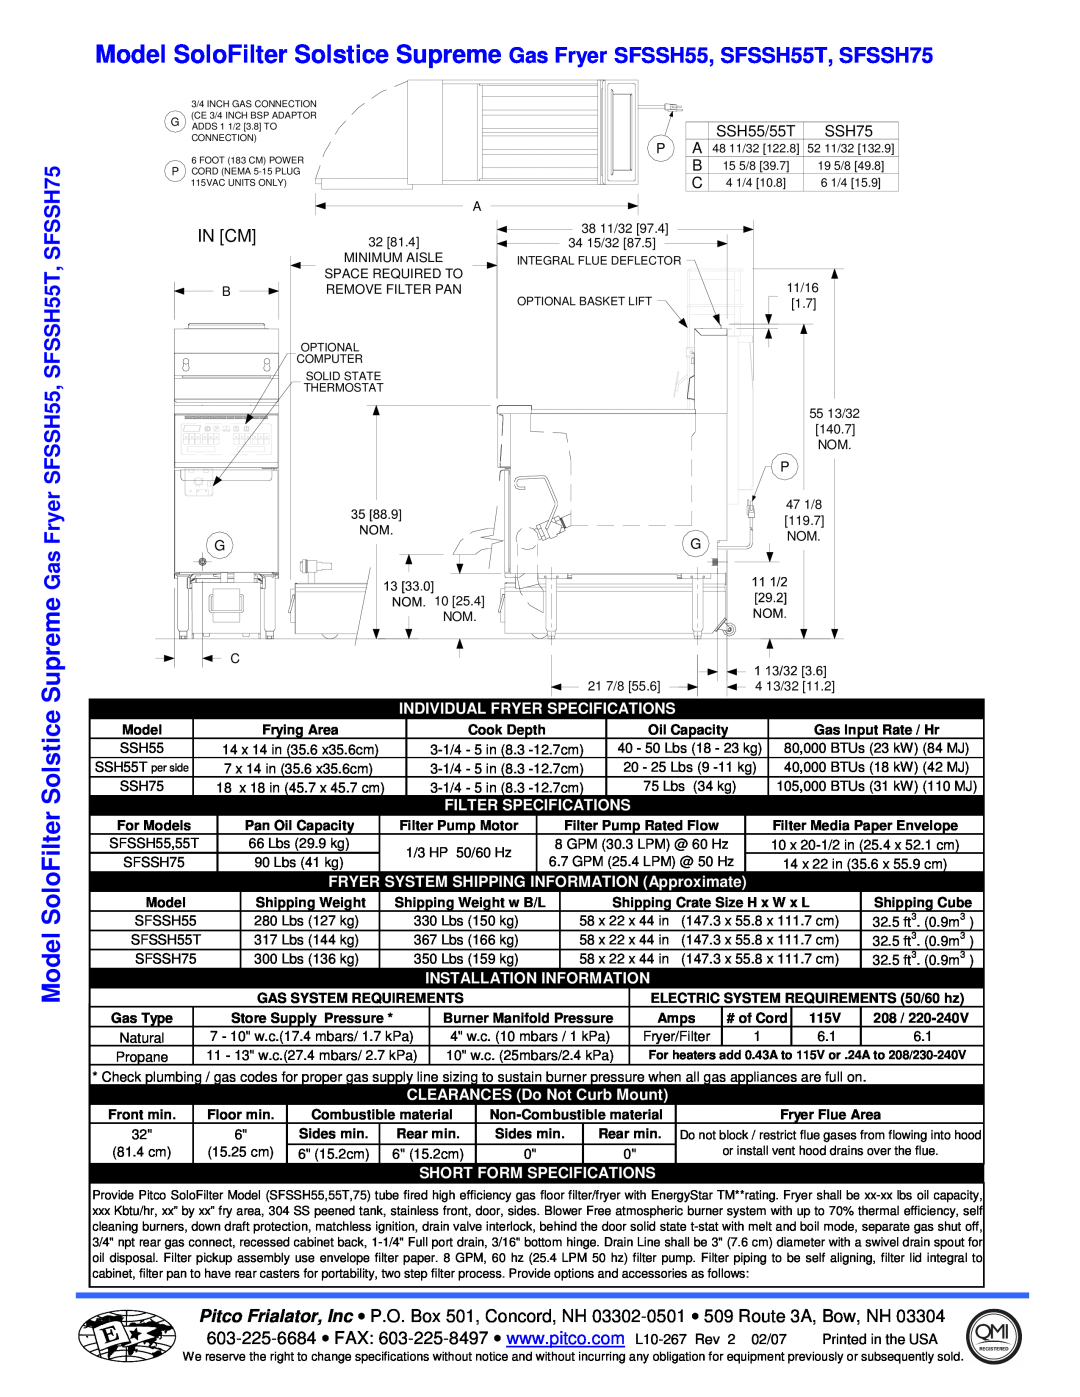 Pitco Frialator SFSSH75, SFSSH55T manual In Cm 